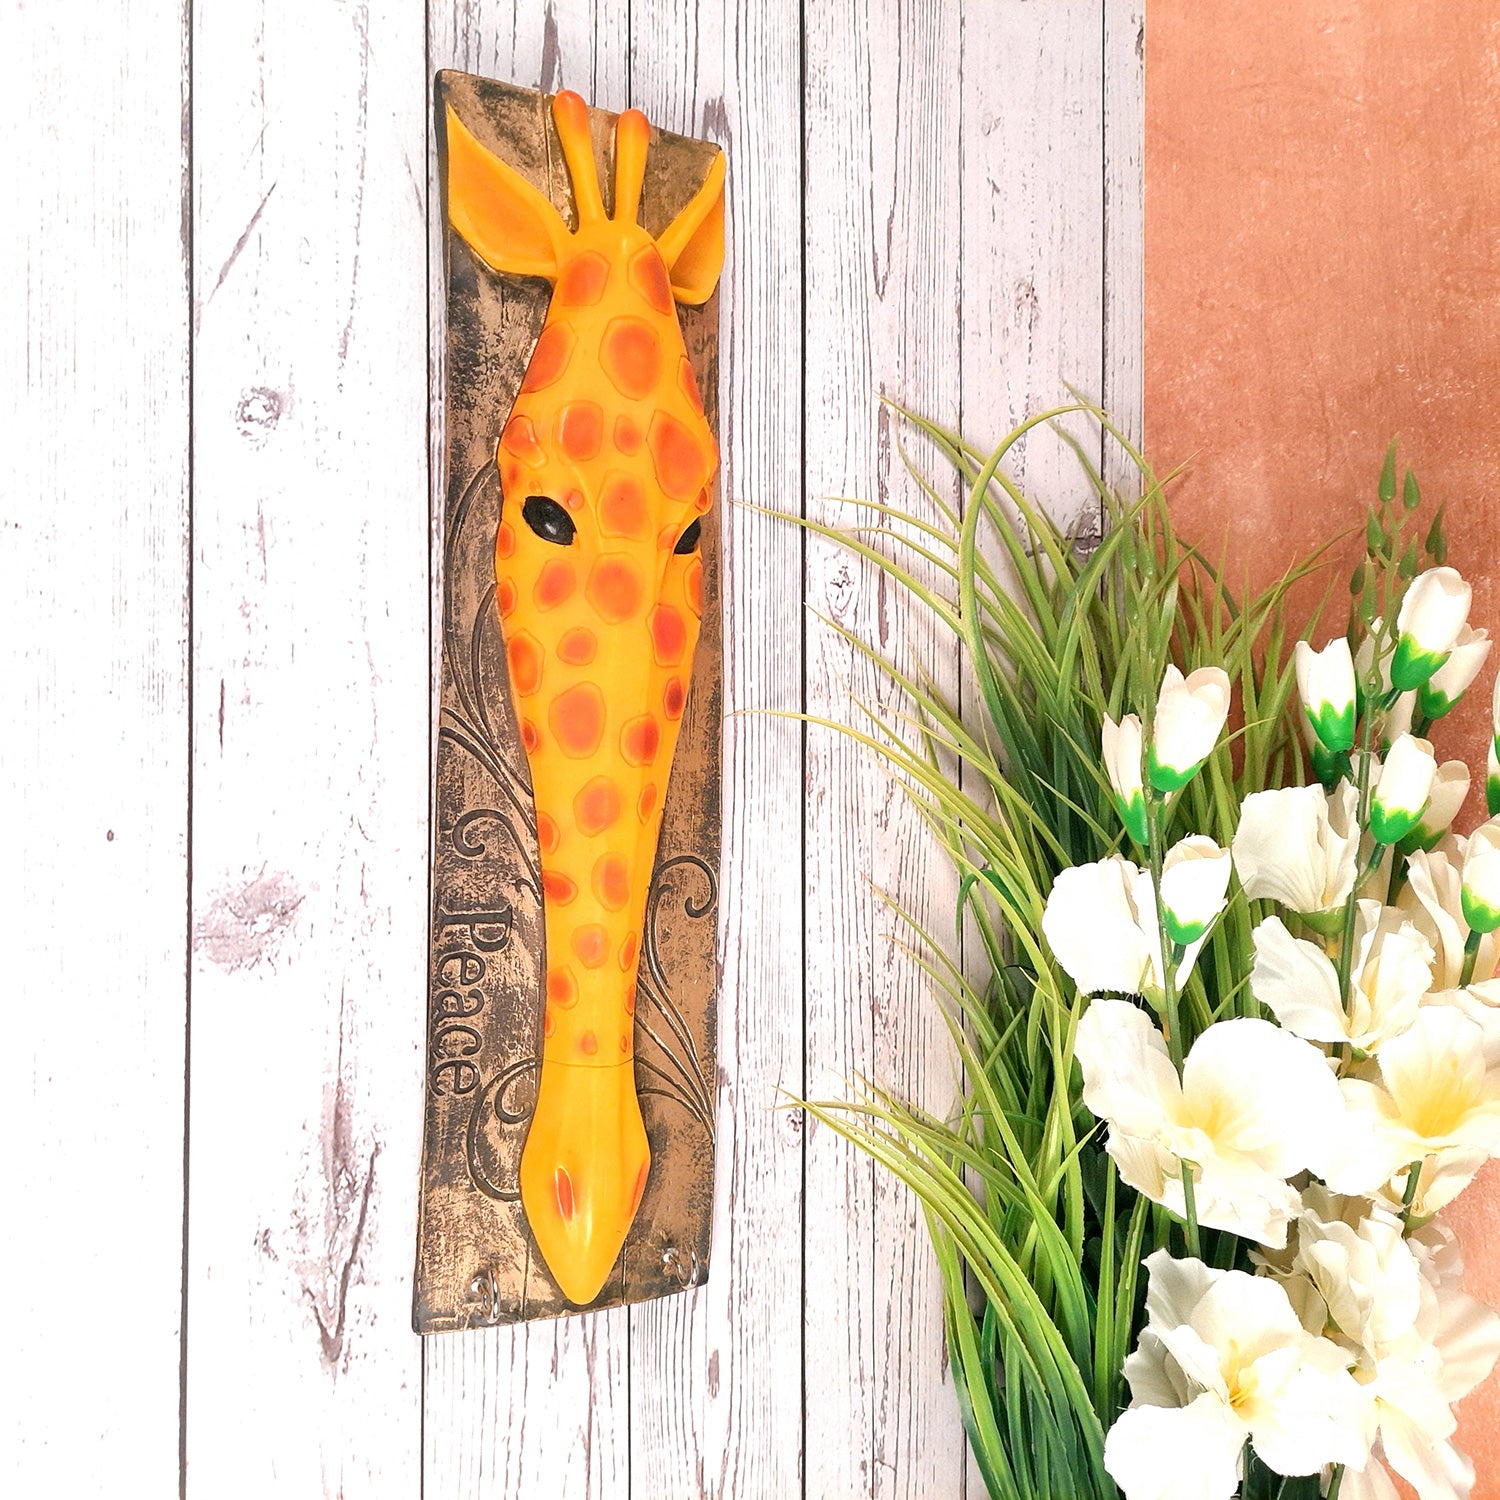 Key Holder Wall Hanging | Key Hook Hanger Stand - Giraffe Design| Keys Organizer - For Home, Entrance, Office Decor & Gifts - 16 Inch (2 Hooks)